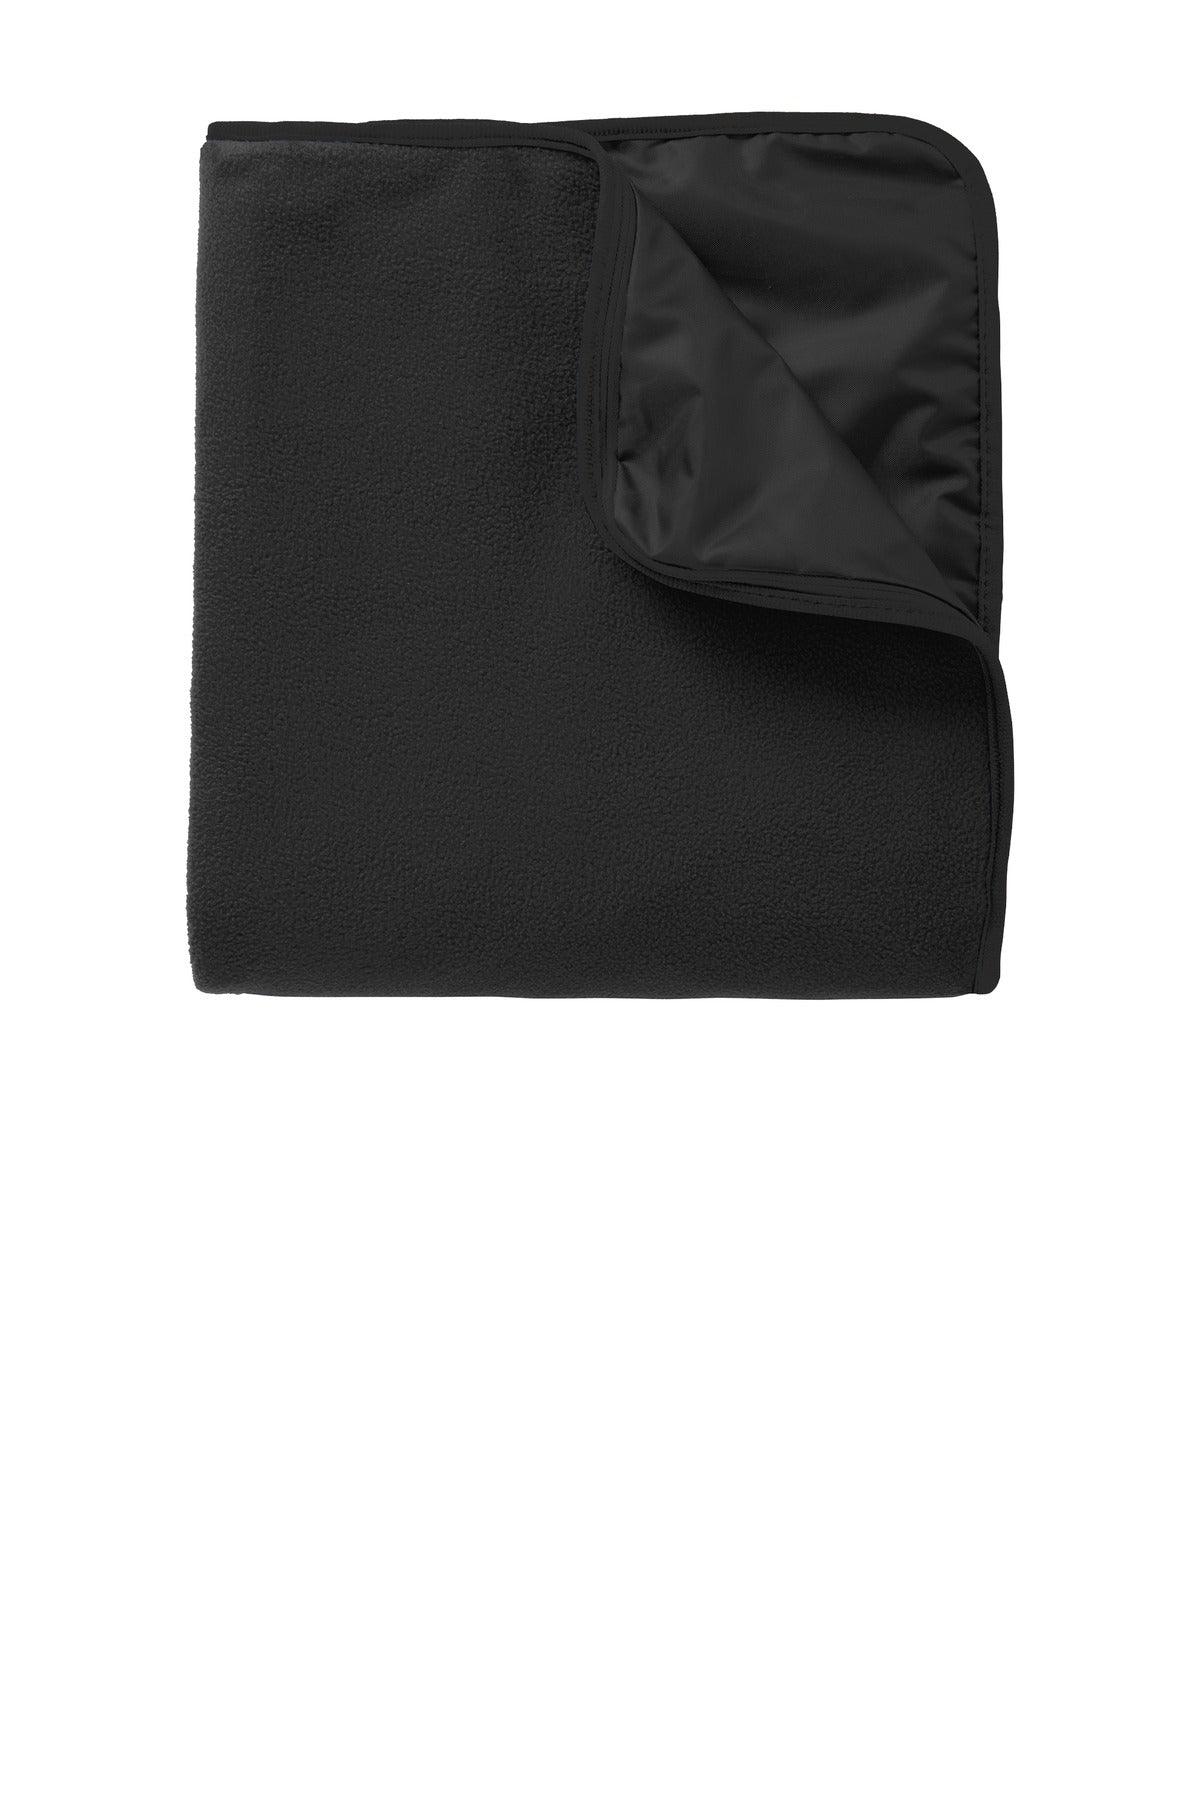 Port Authority Fleece & Poly Travel Blanket. TB850 - Dresses Max